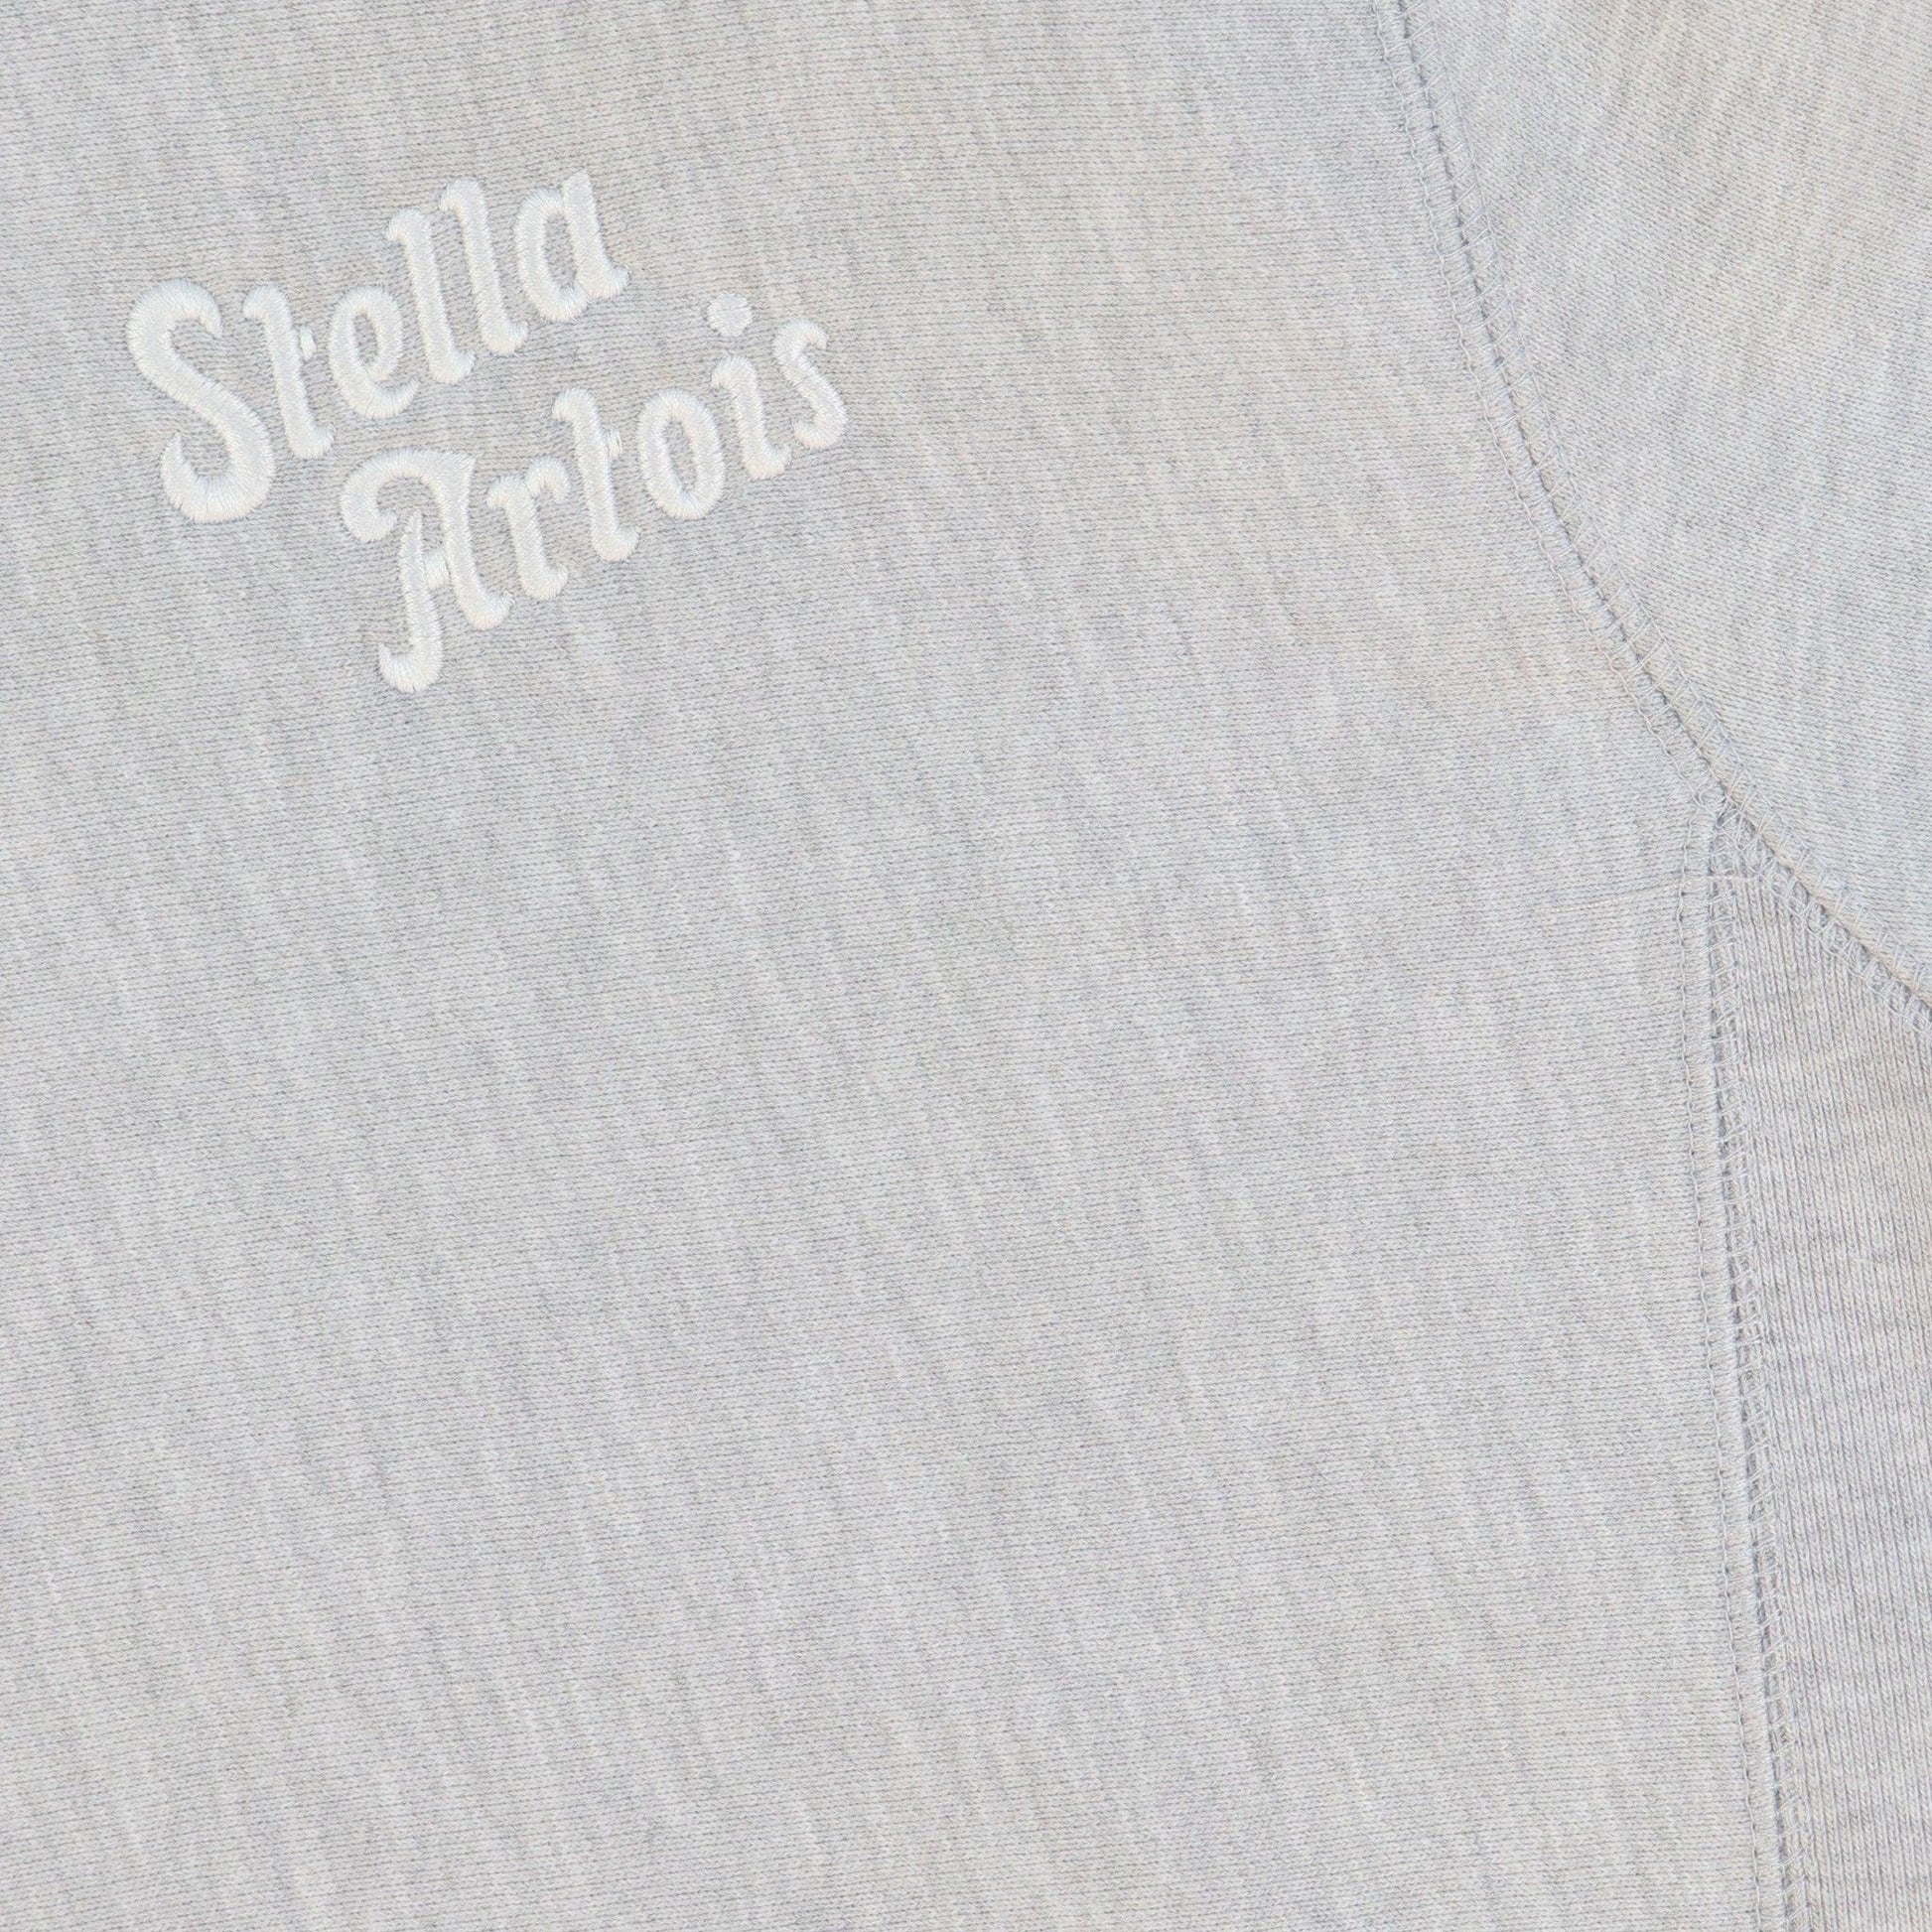 Close up of white embroidered Stella Artois logo 